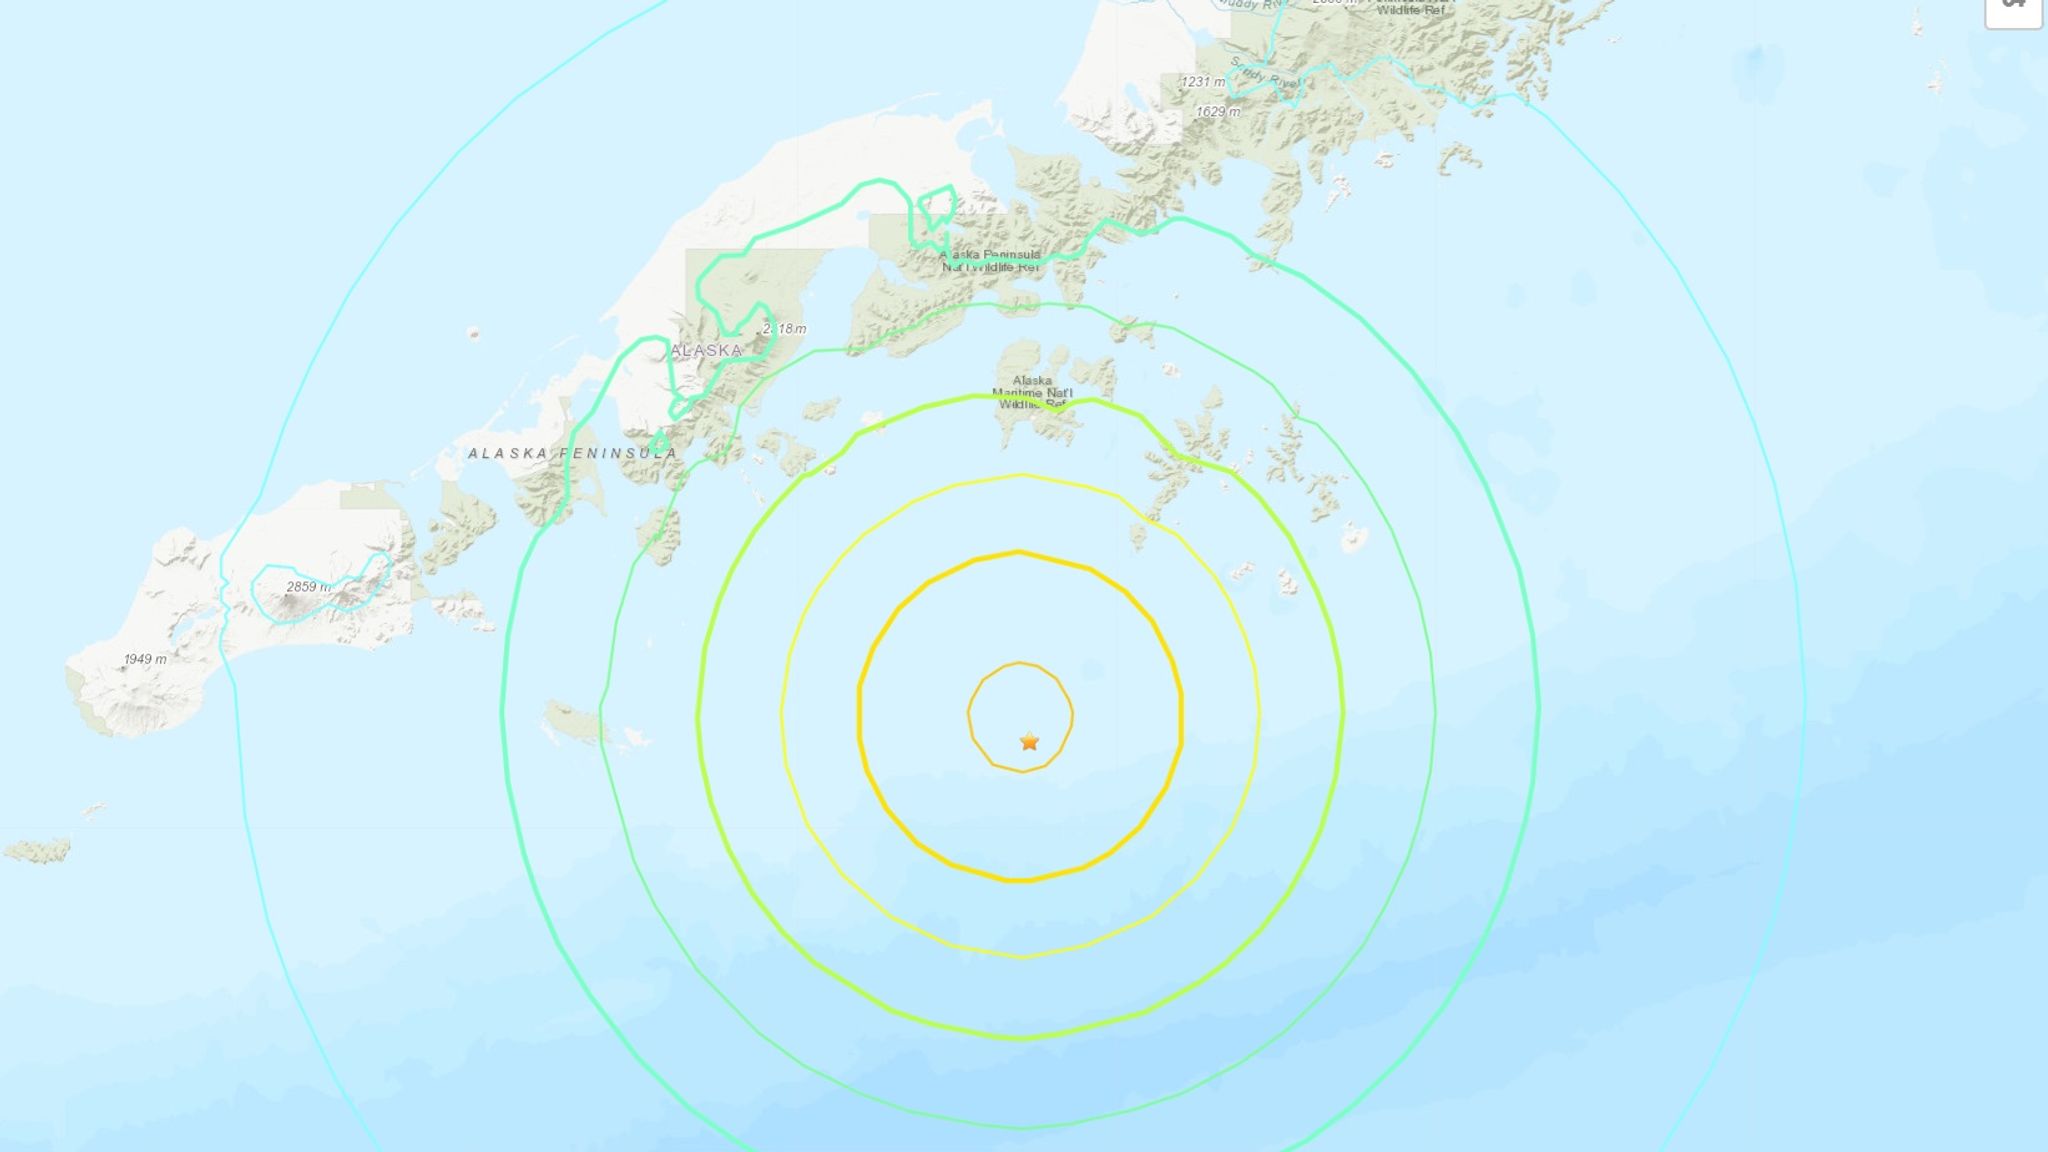 US tsunami warning issued after 7.2 magnitude earthquake in Alaska Peninsula region